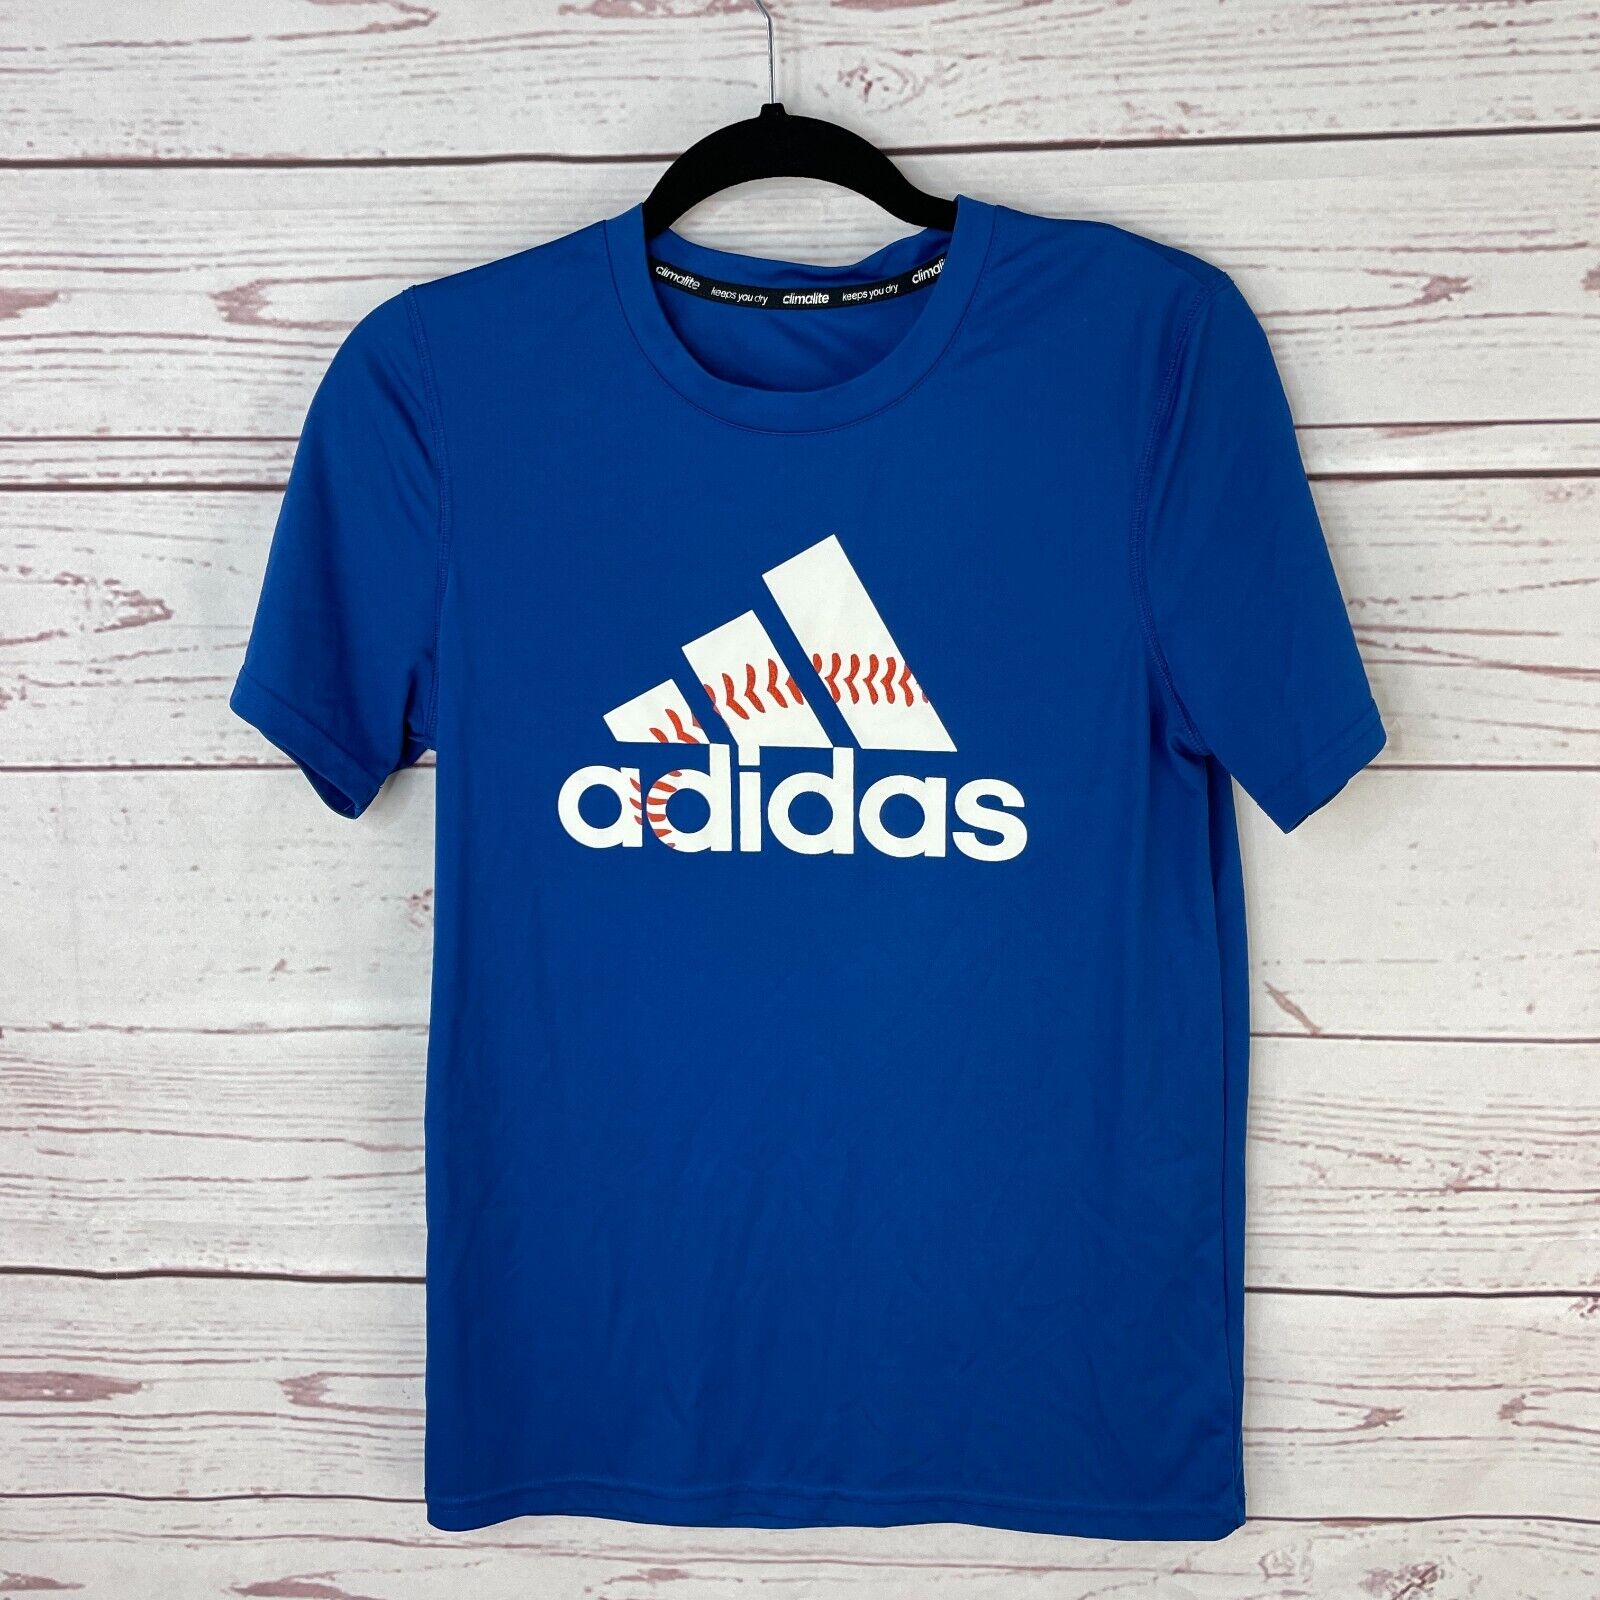 Adidas Youth Boys Kids Blue Graphic Print Short Sleeve Active Shirt Size Large